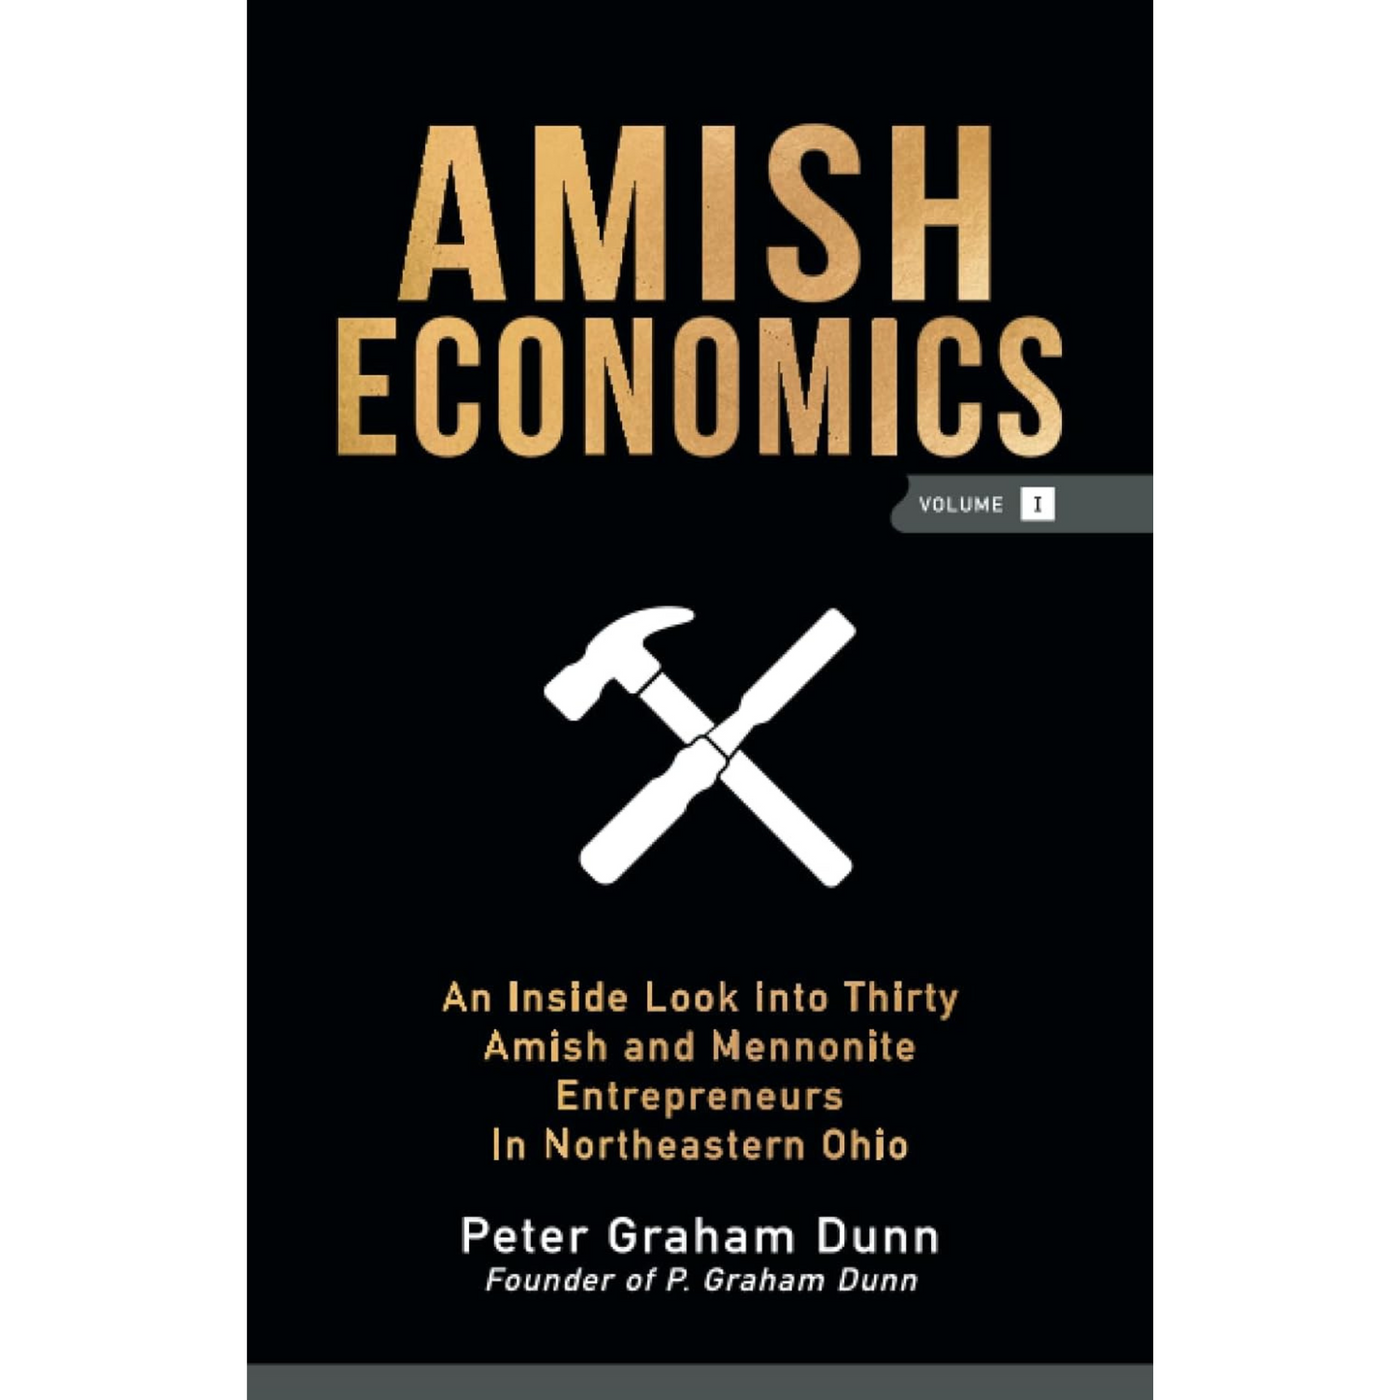 Amish Economics Volume 1